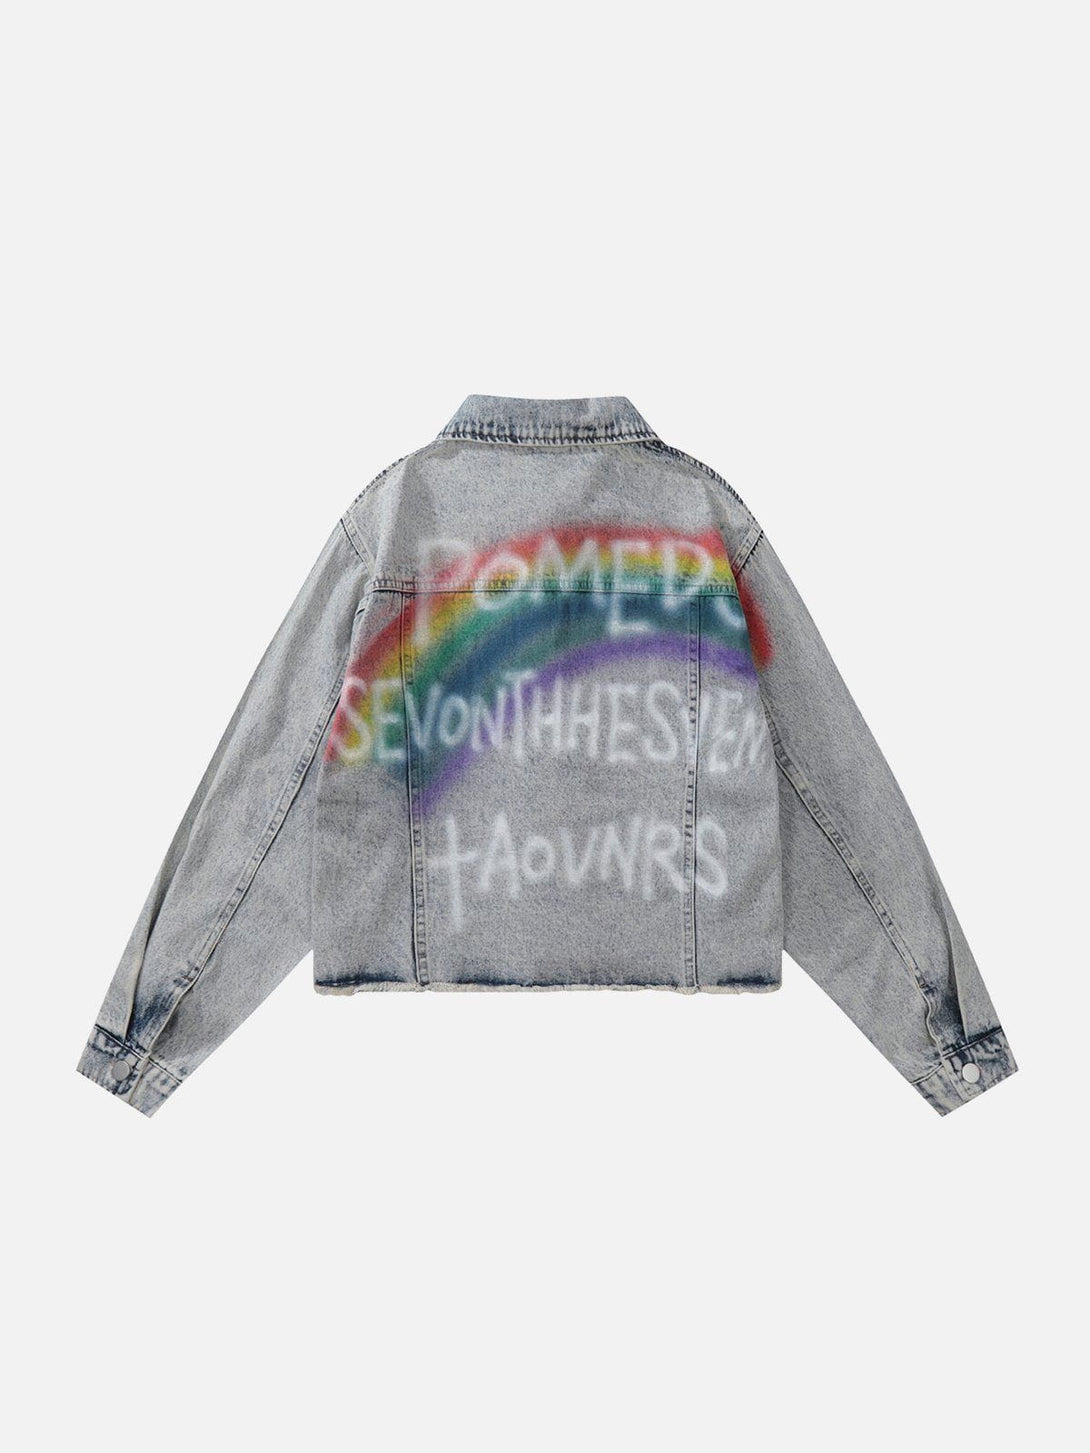 Levefly - Rainbow Letter Print Denim Jacket - Streetwear Fashion - levefly.com